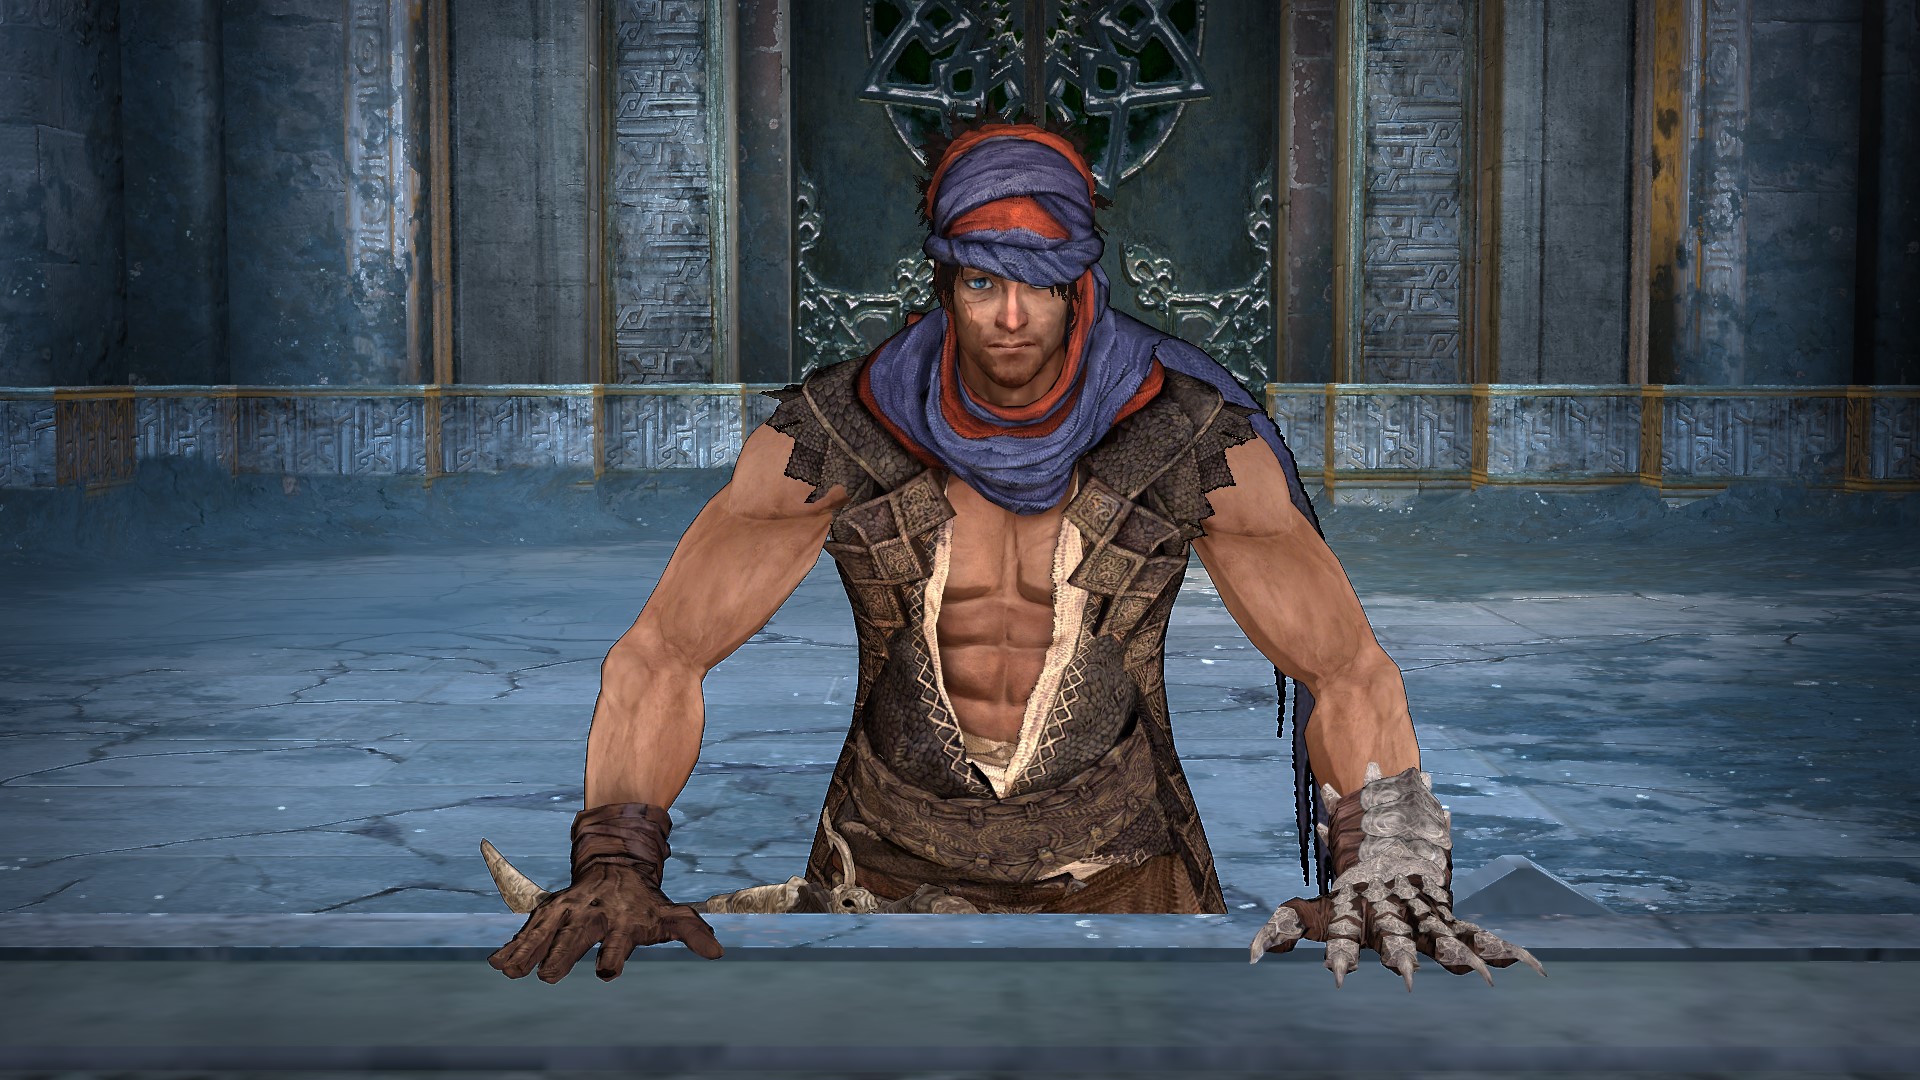 Prince of Persia (2008 video game) - Wikipedia